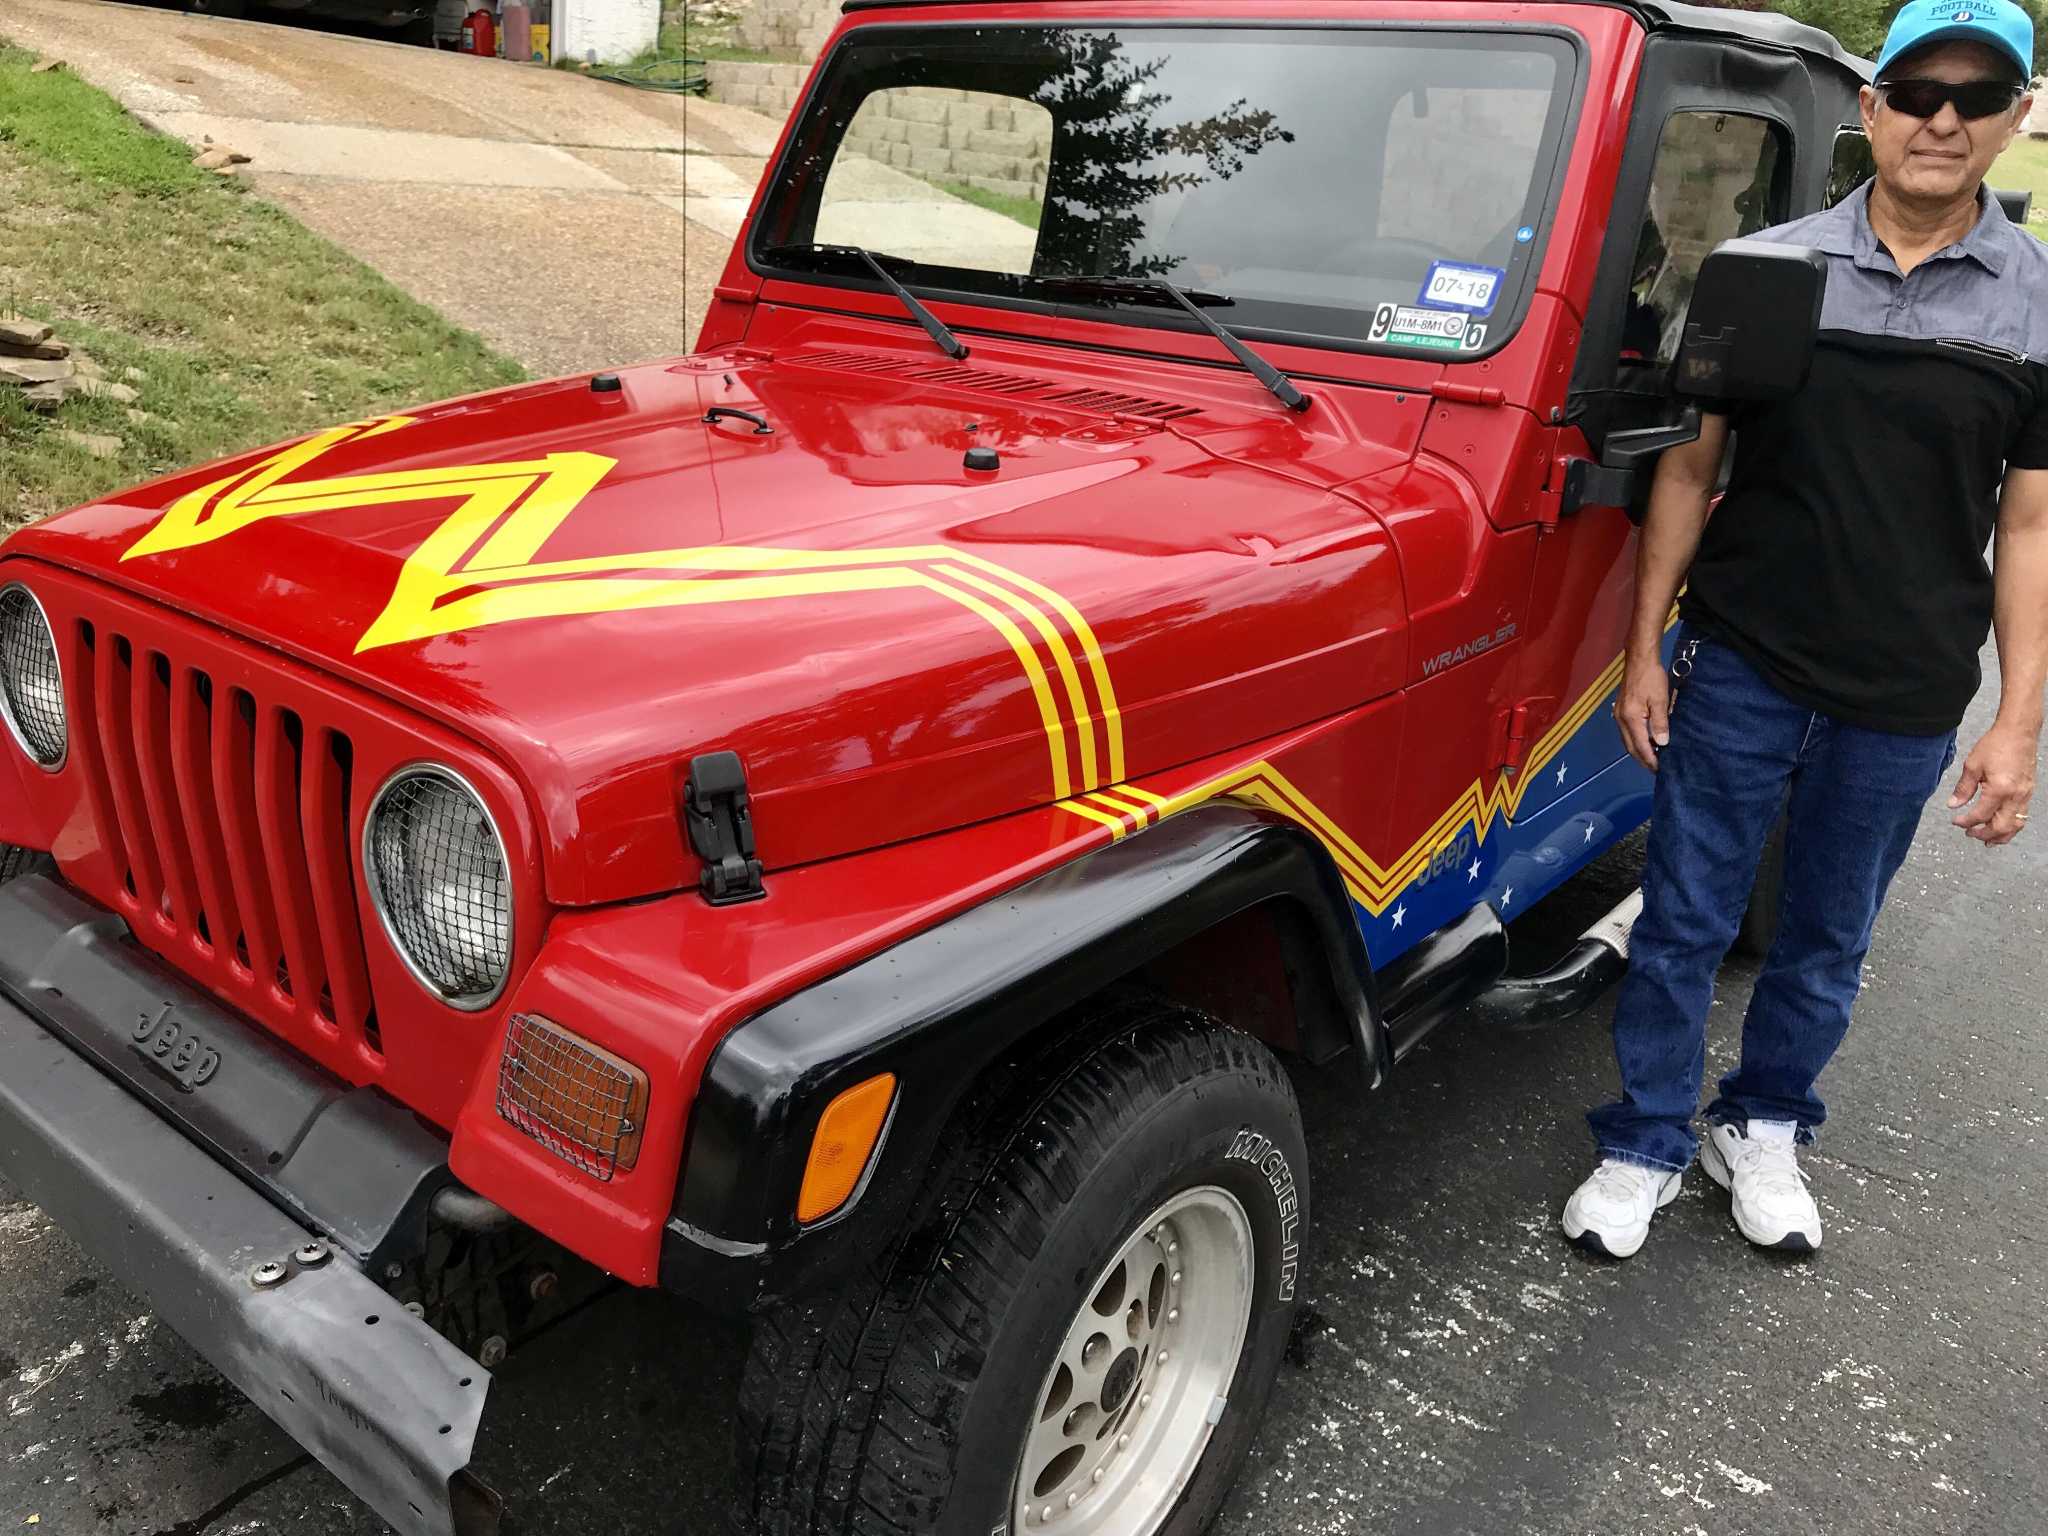 San Antonio granddad drives Wonder Woman Jeep